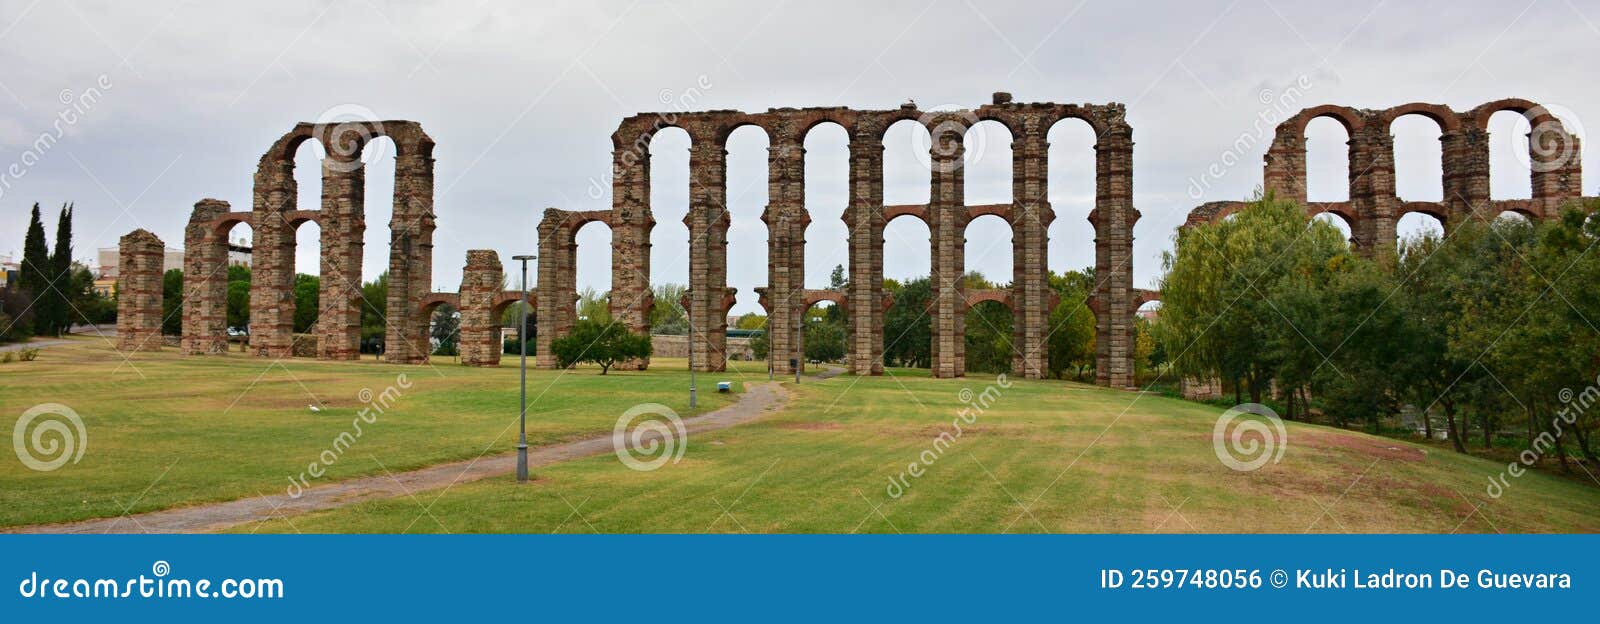 roman aqueduct of los milagros in mÃÂ©rida, spain